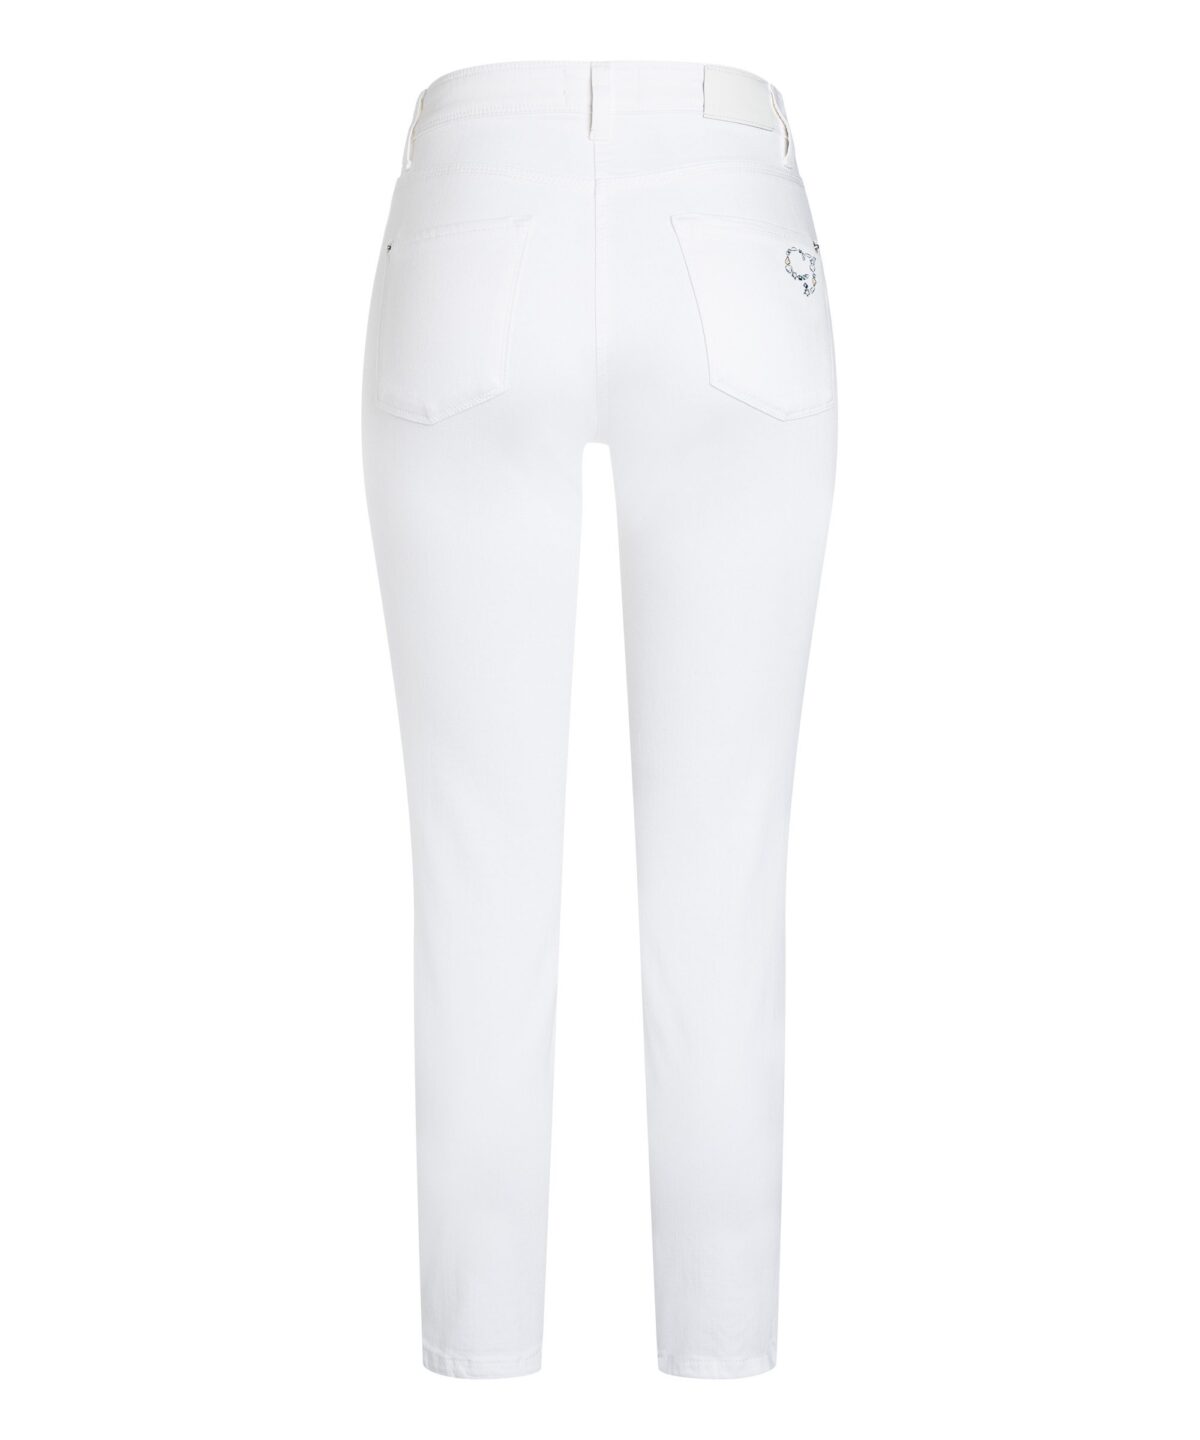 Cambio bukser Piper short hvid denim 1